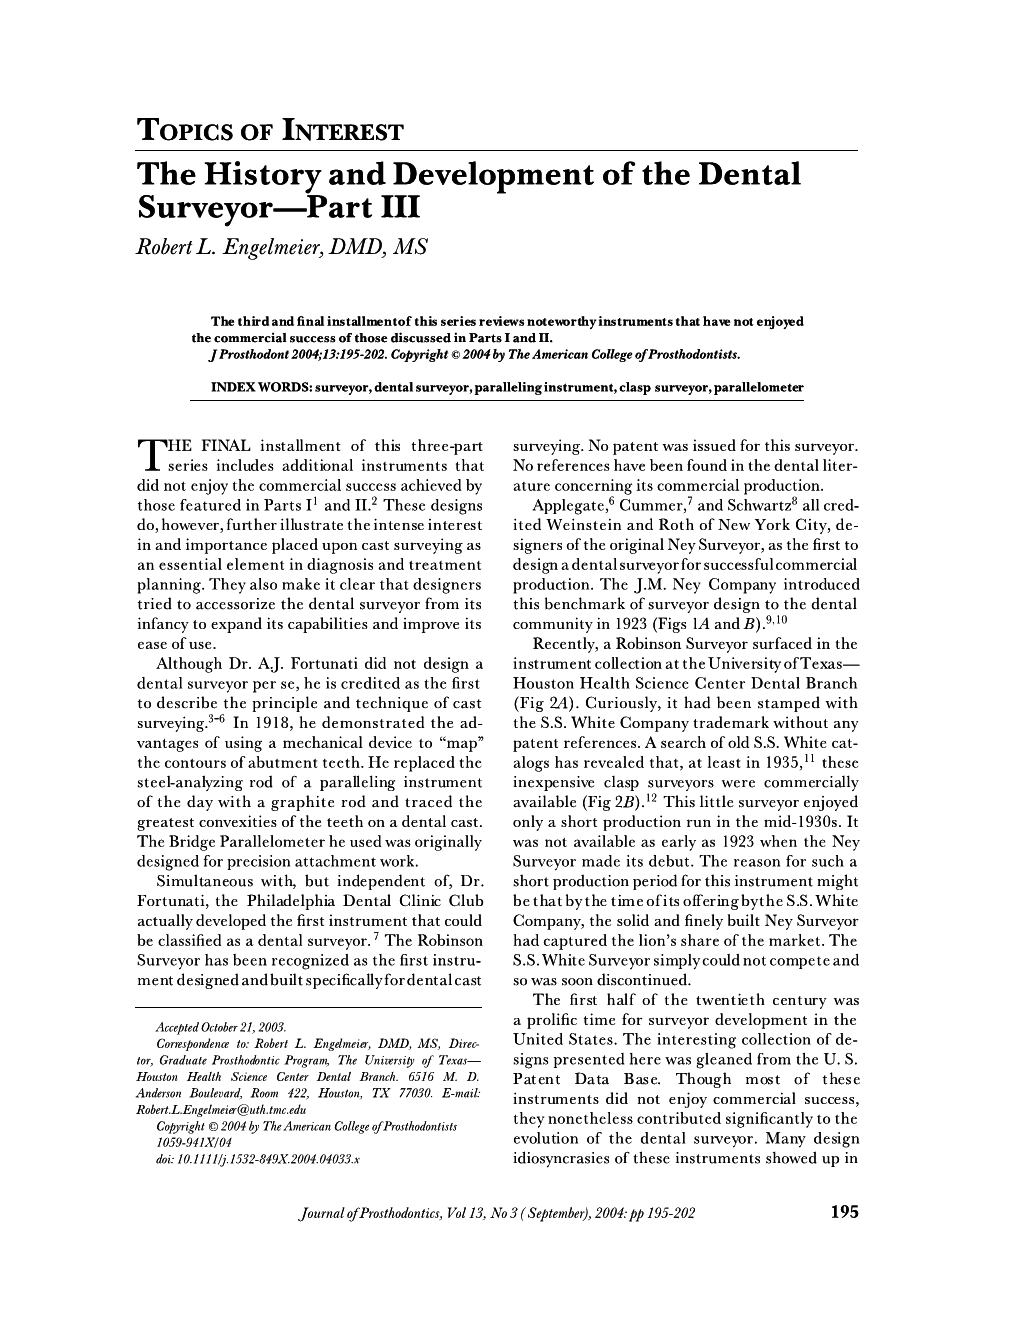 The History and Development of the Dental Surveyor—Part III Robert L